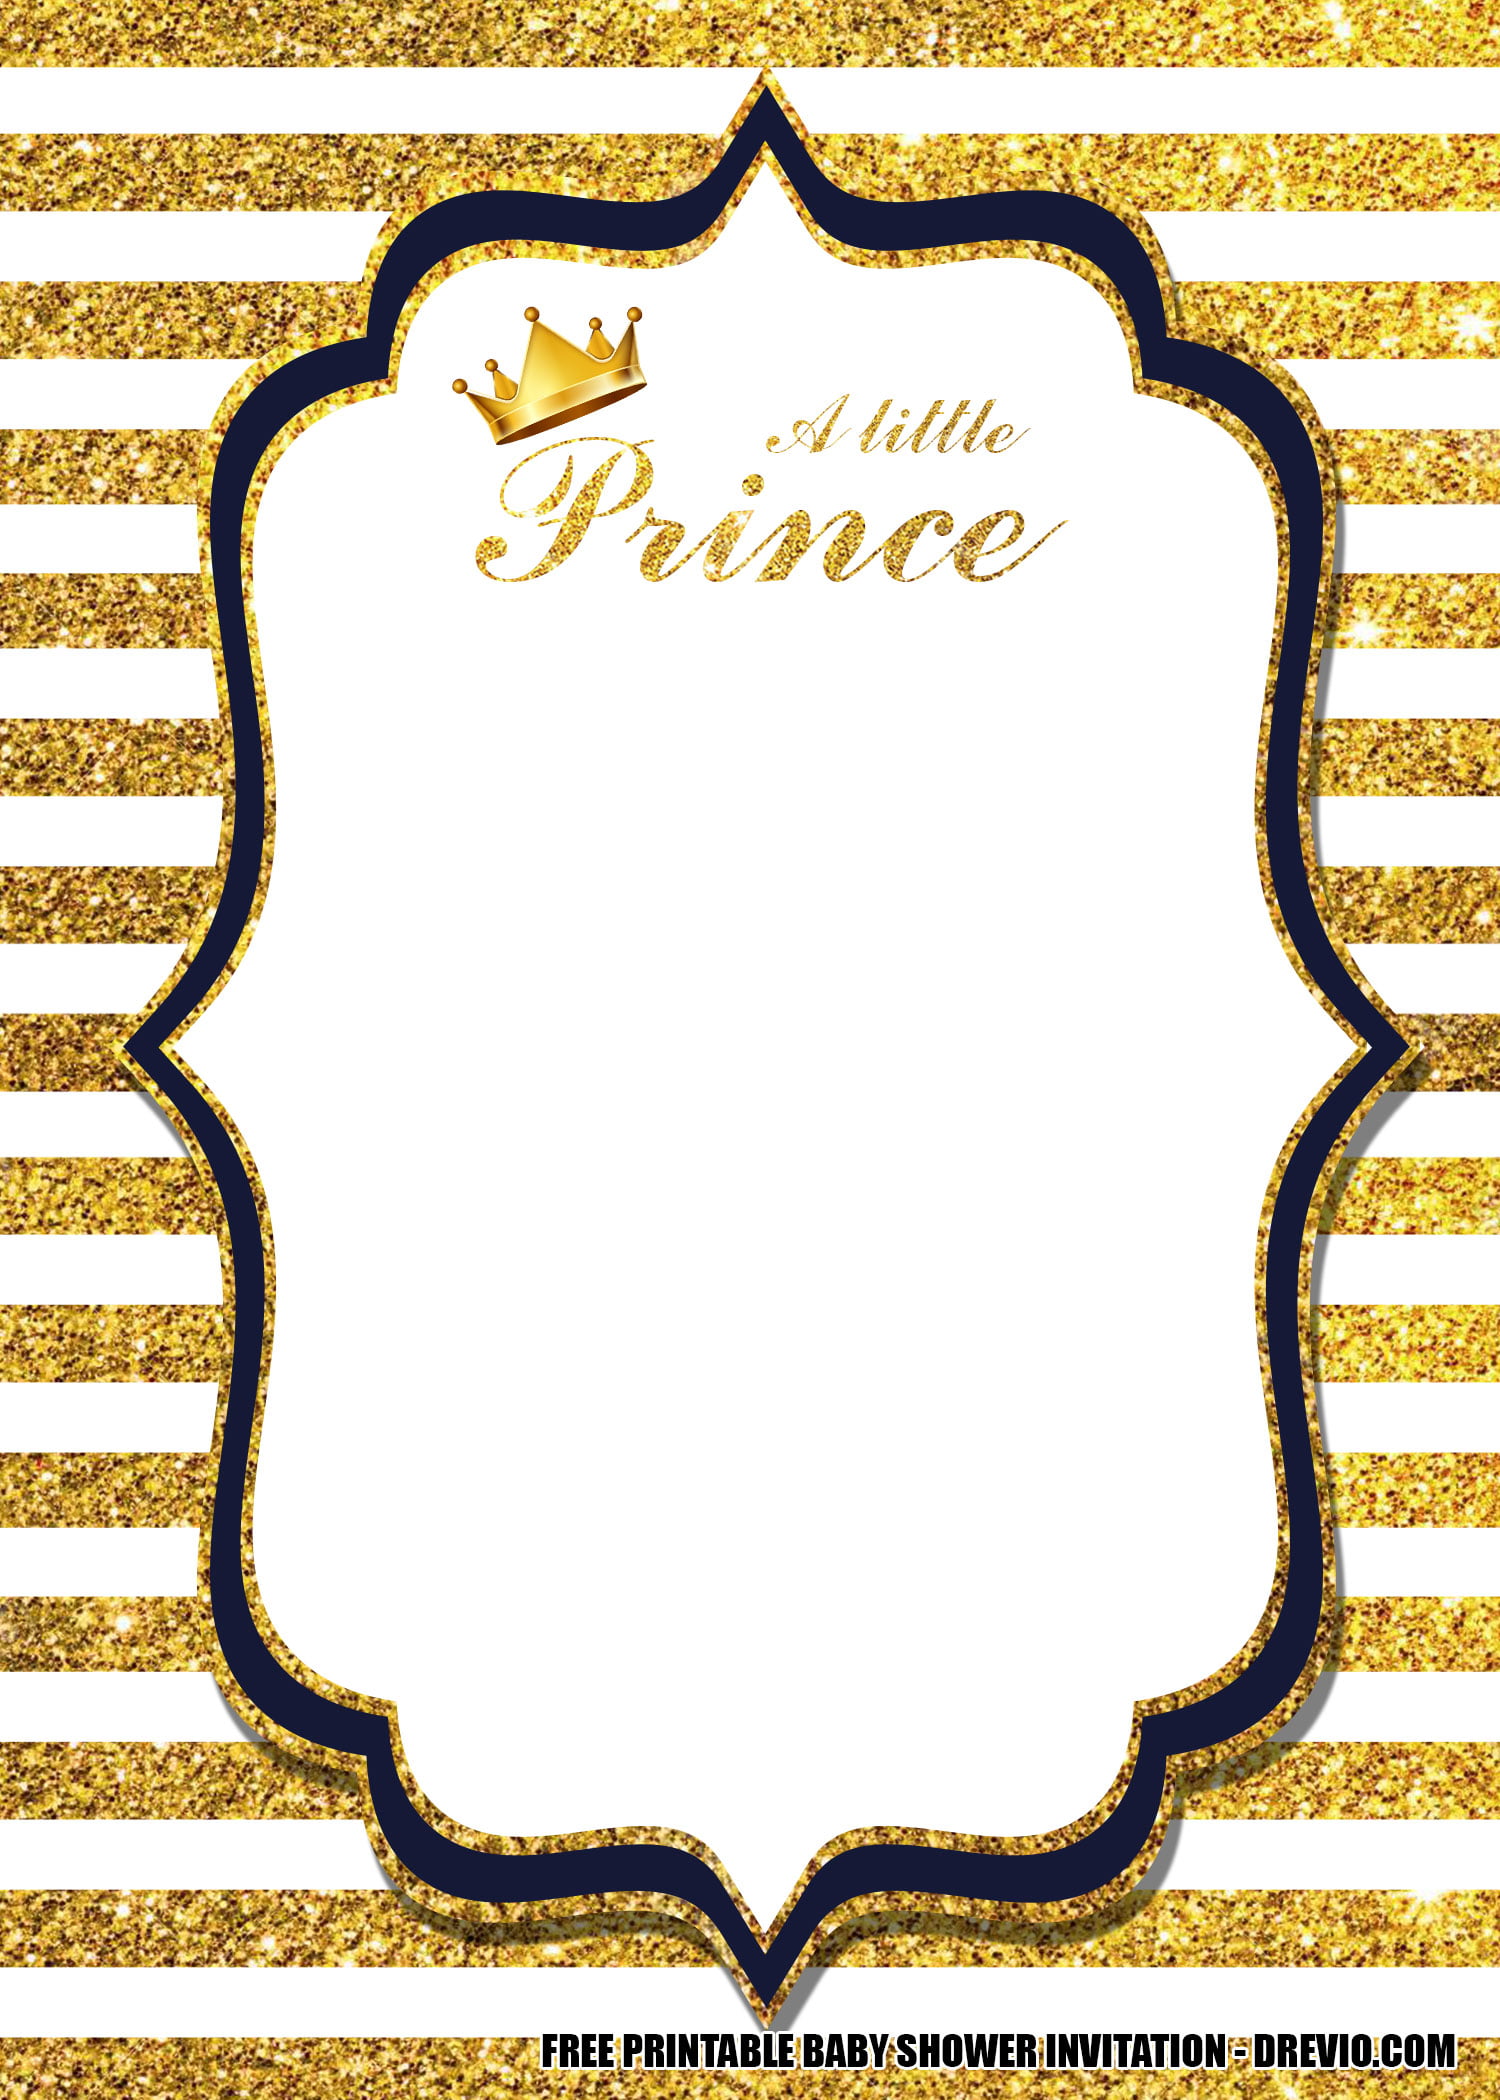 Free Prince Baby Shower Invitation Templates Download Hundreds Free Printable Birthday Invitation Templates